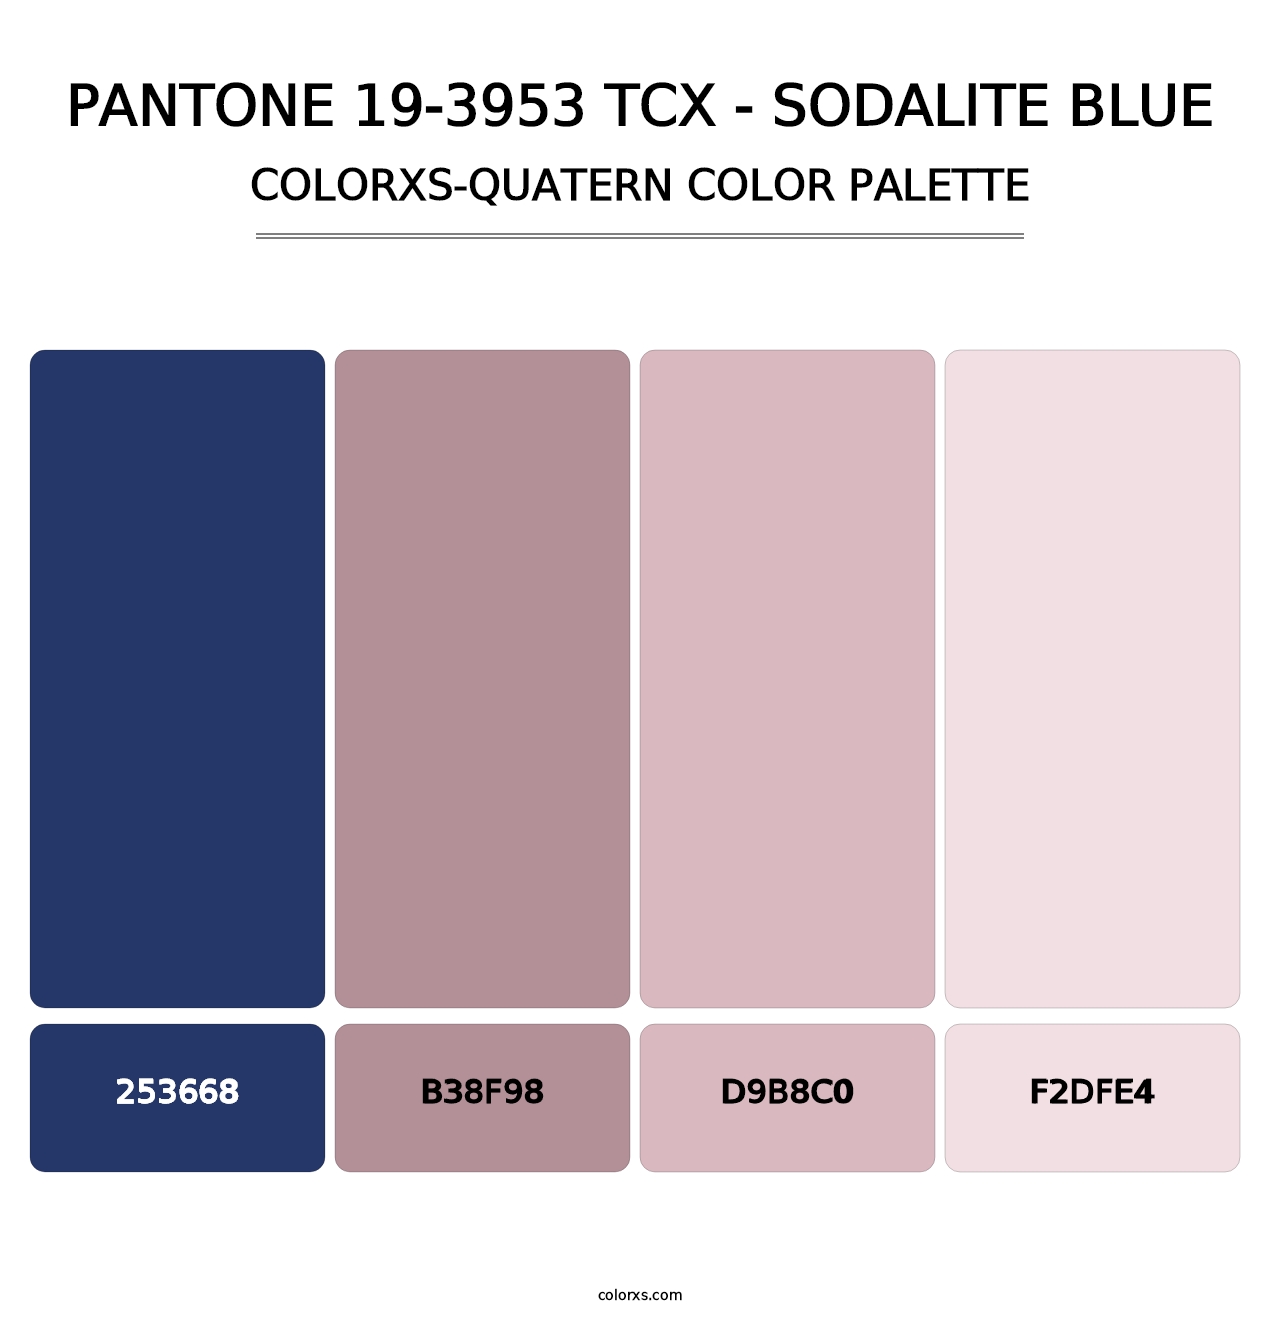 PANTONE 19-3953 TCX - Sodalite Blue - Colorxs Quatern Palette